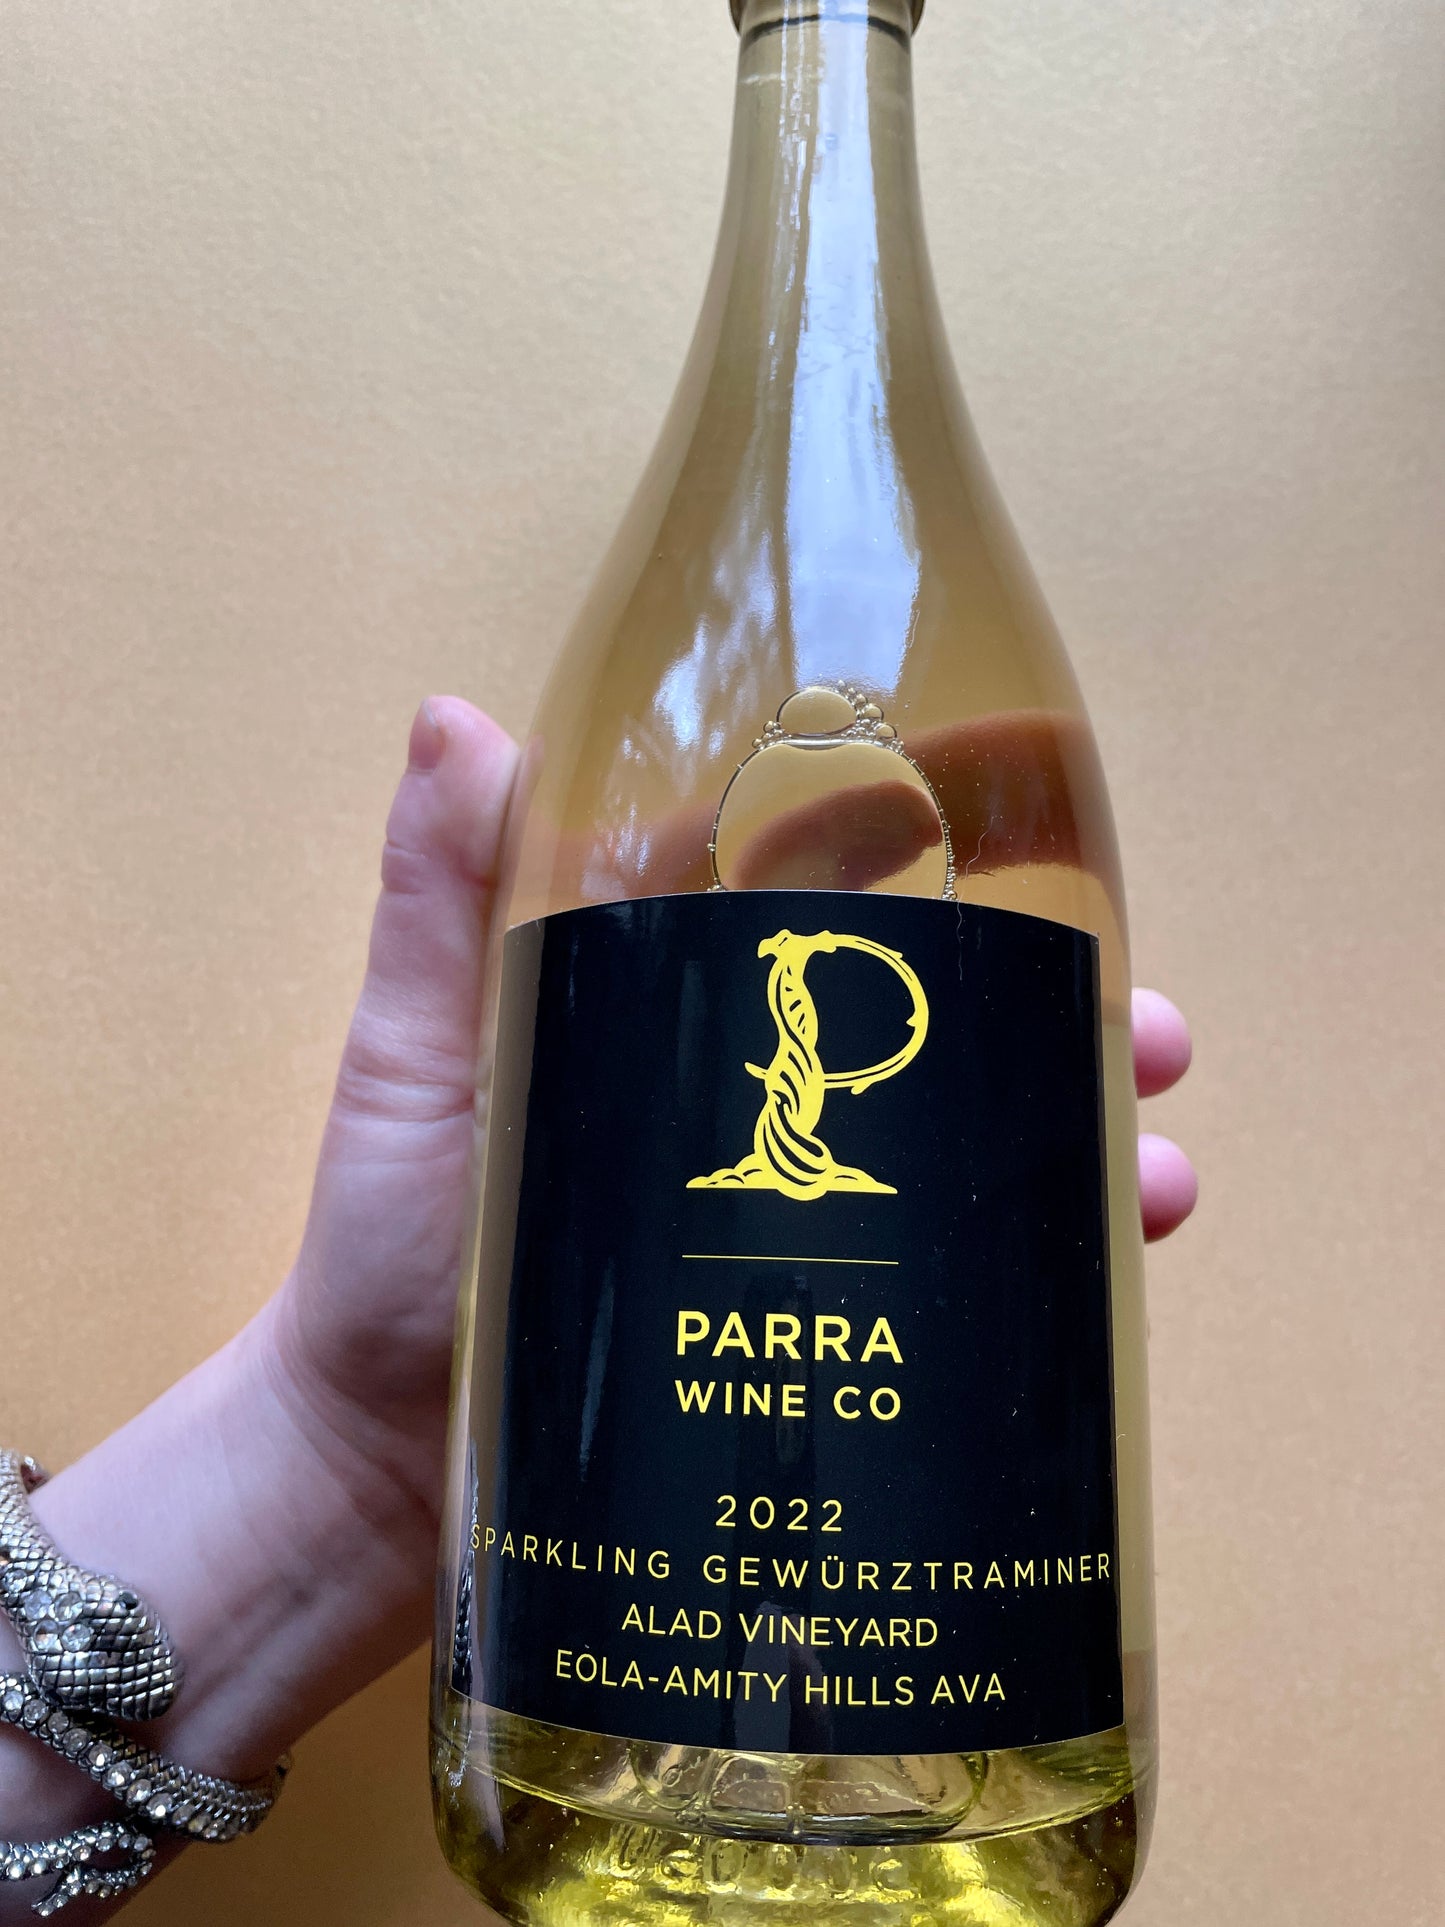 Parra Wine Co. Sparkling Gewürztraminer 2022